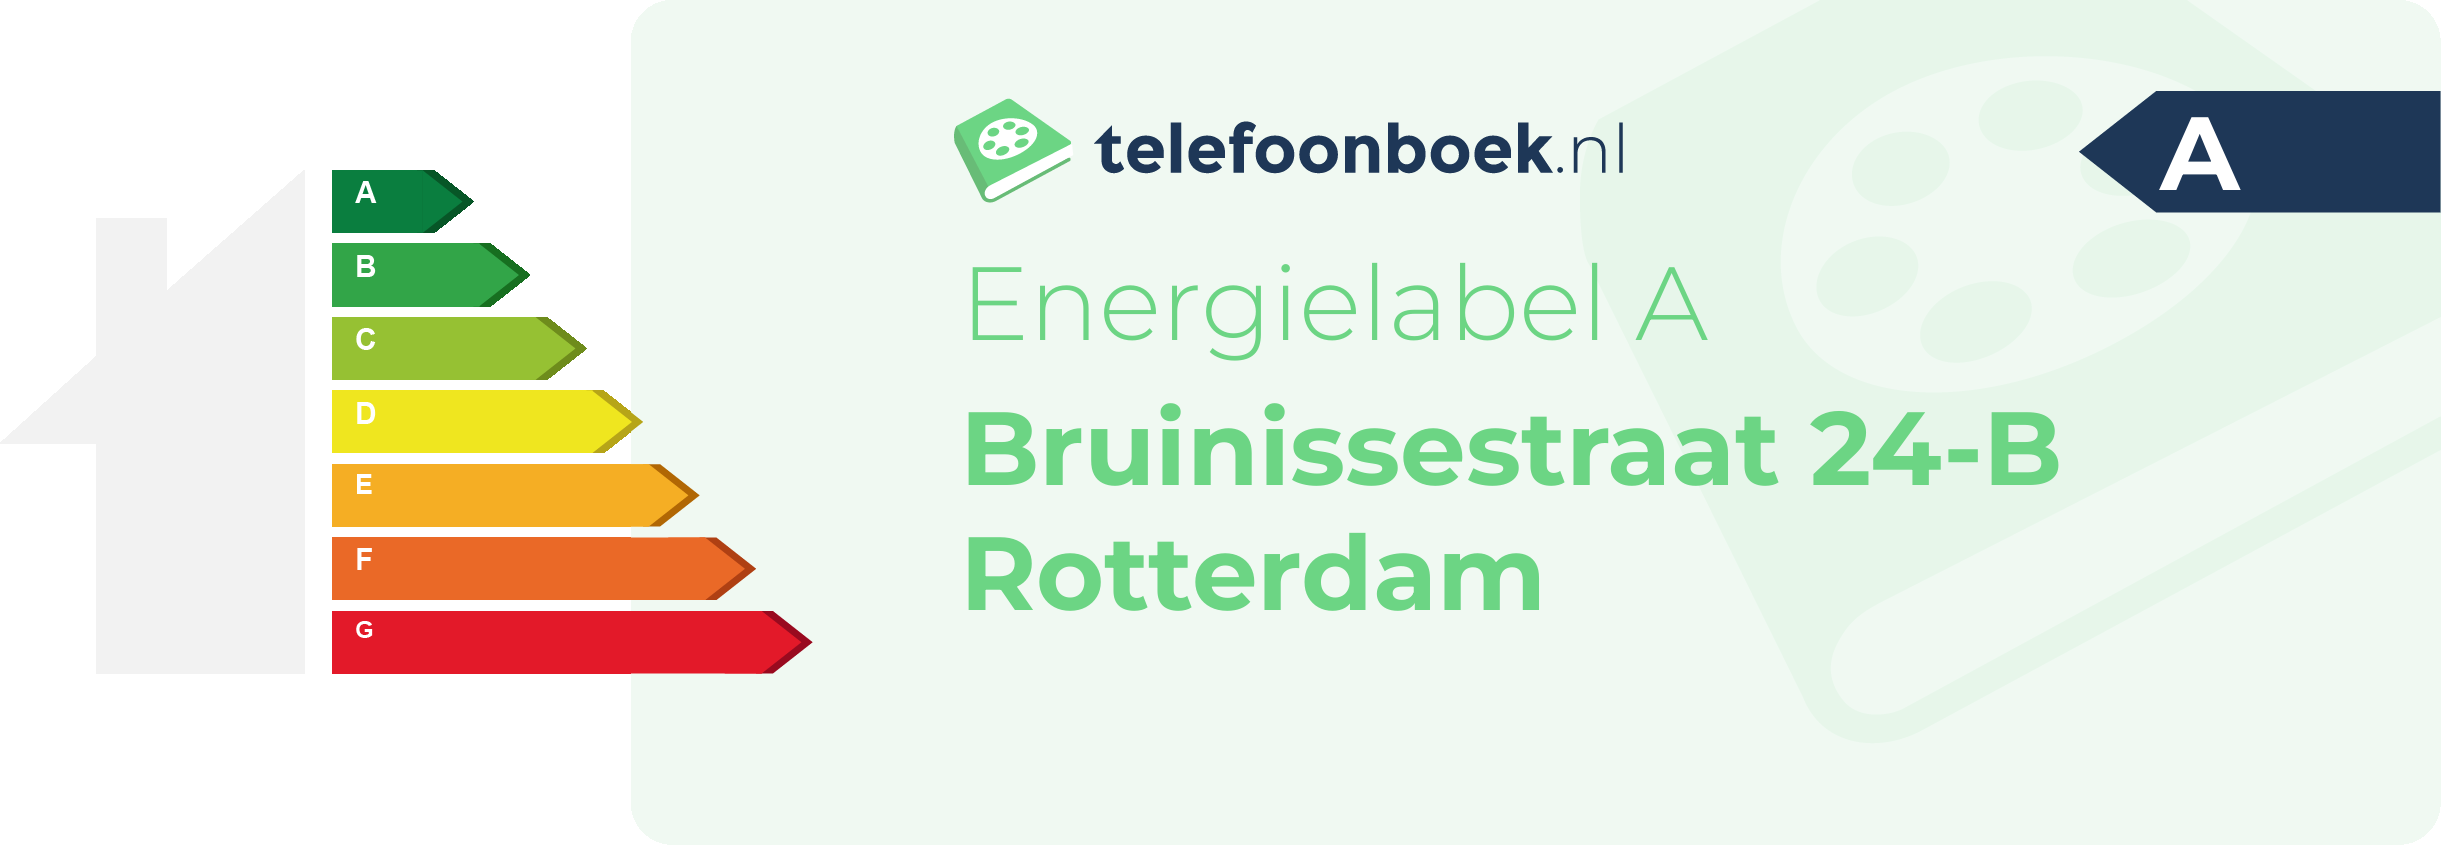 Energielabel Bruinissestraat 24-B Rotterdam